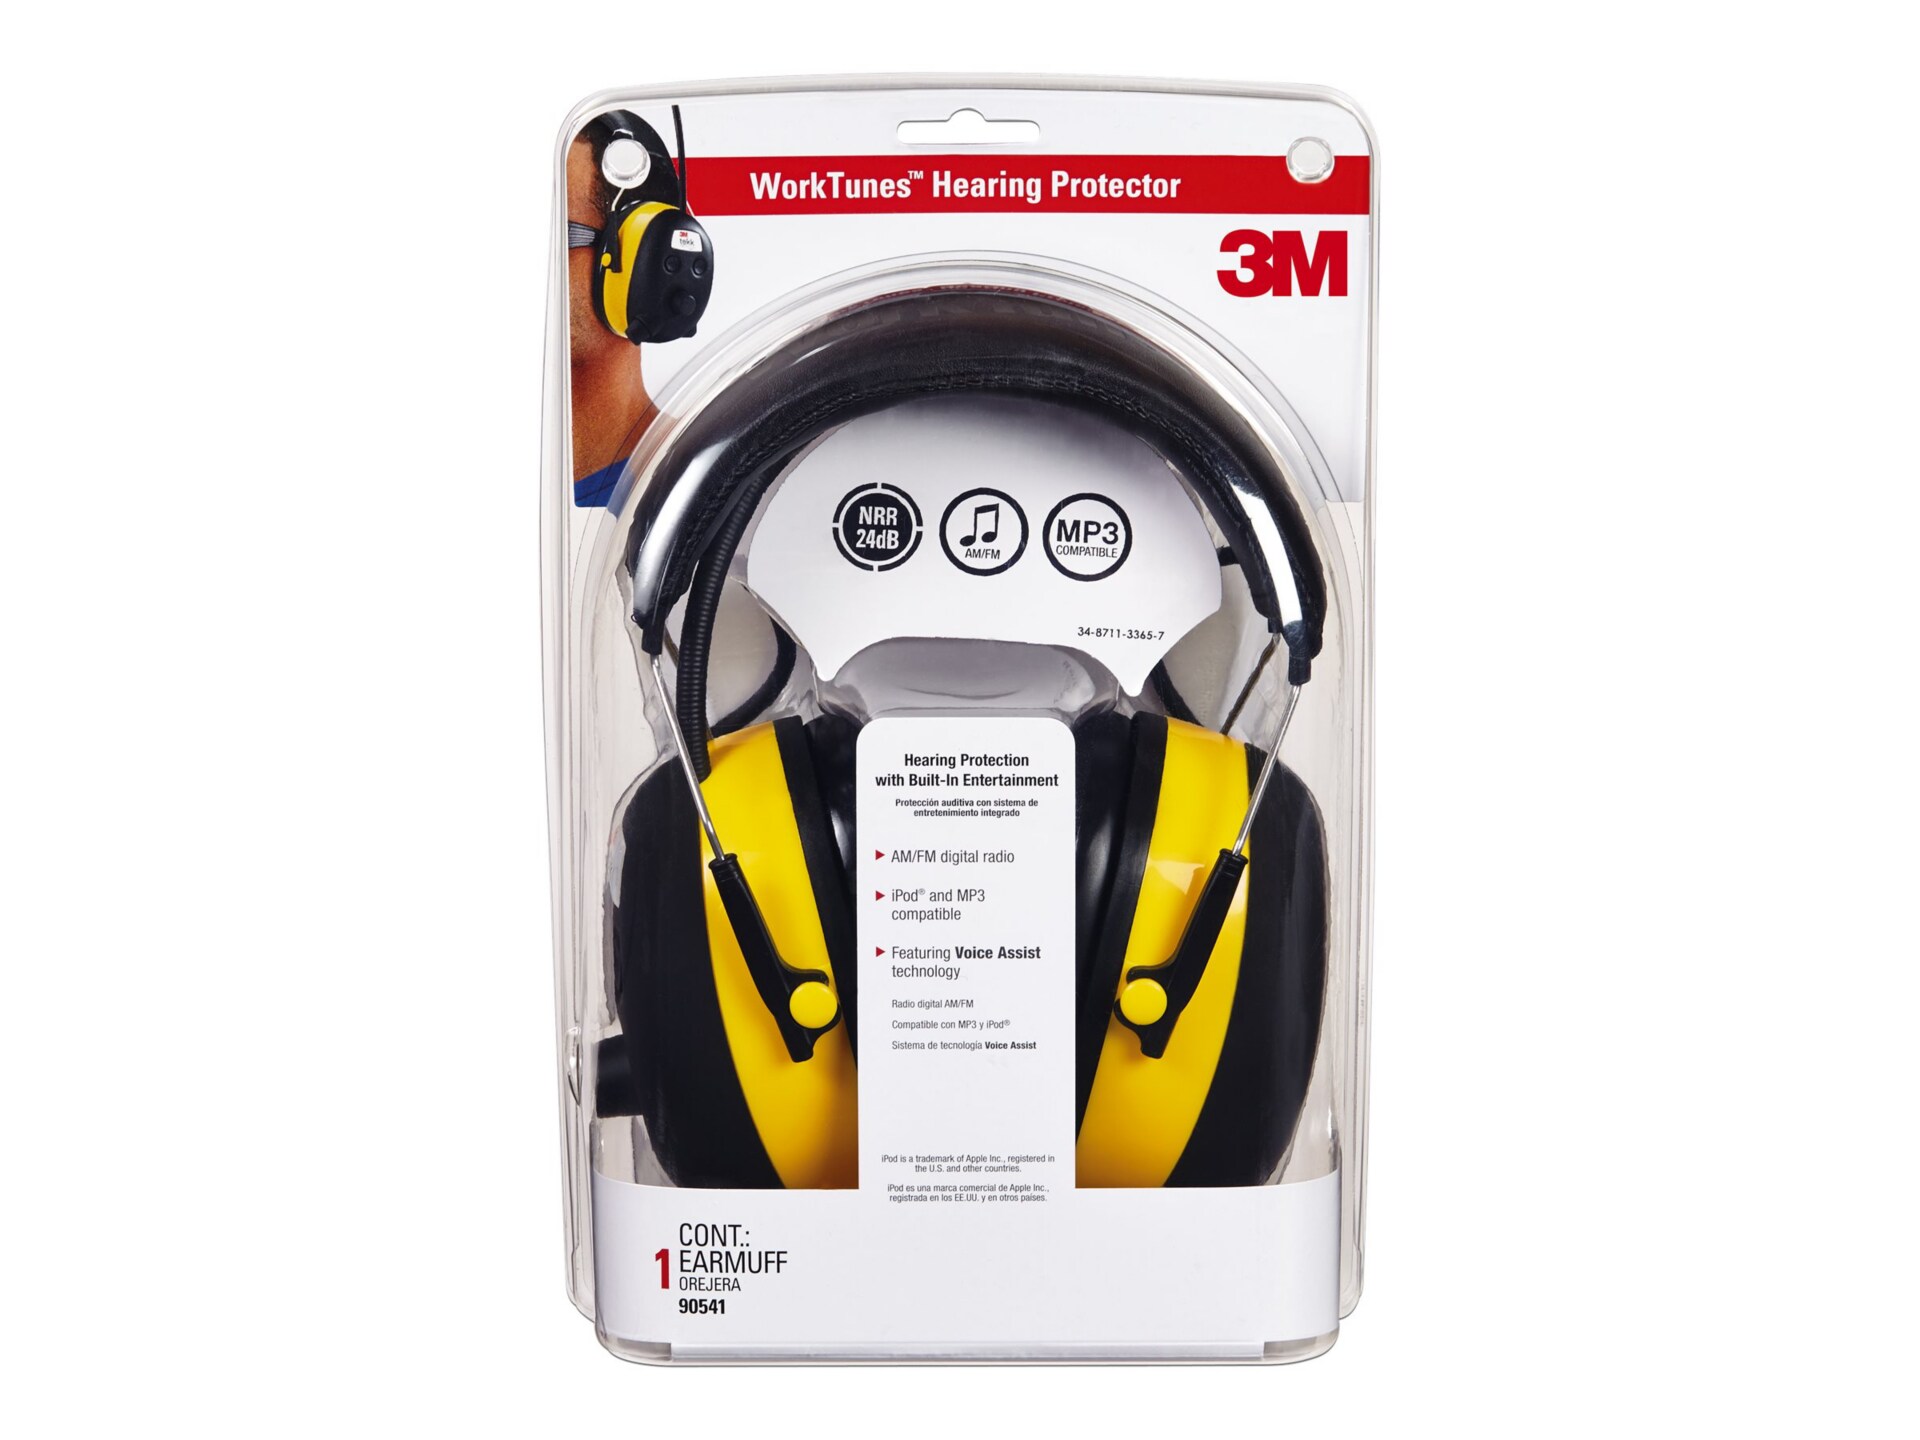 3M TEKK Protection Digital WorkTunes Hearing Protector and AM/FM Stereo Radio - headphones with radio